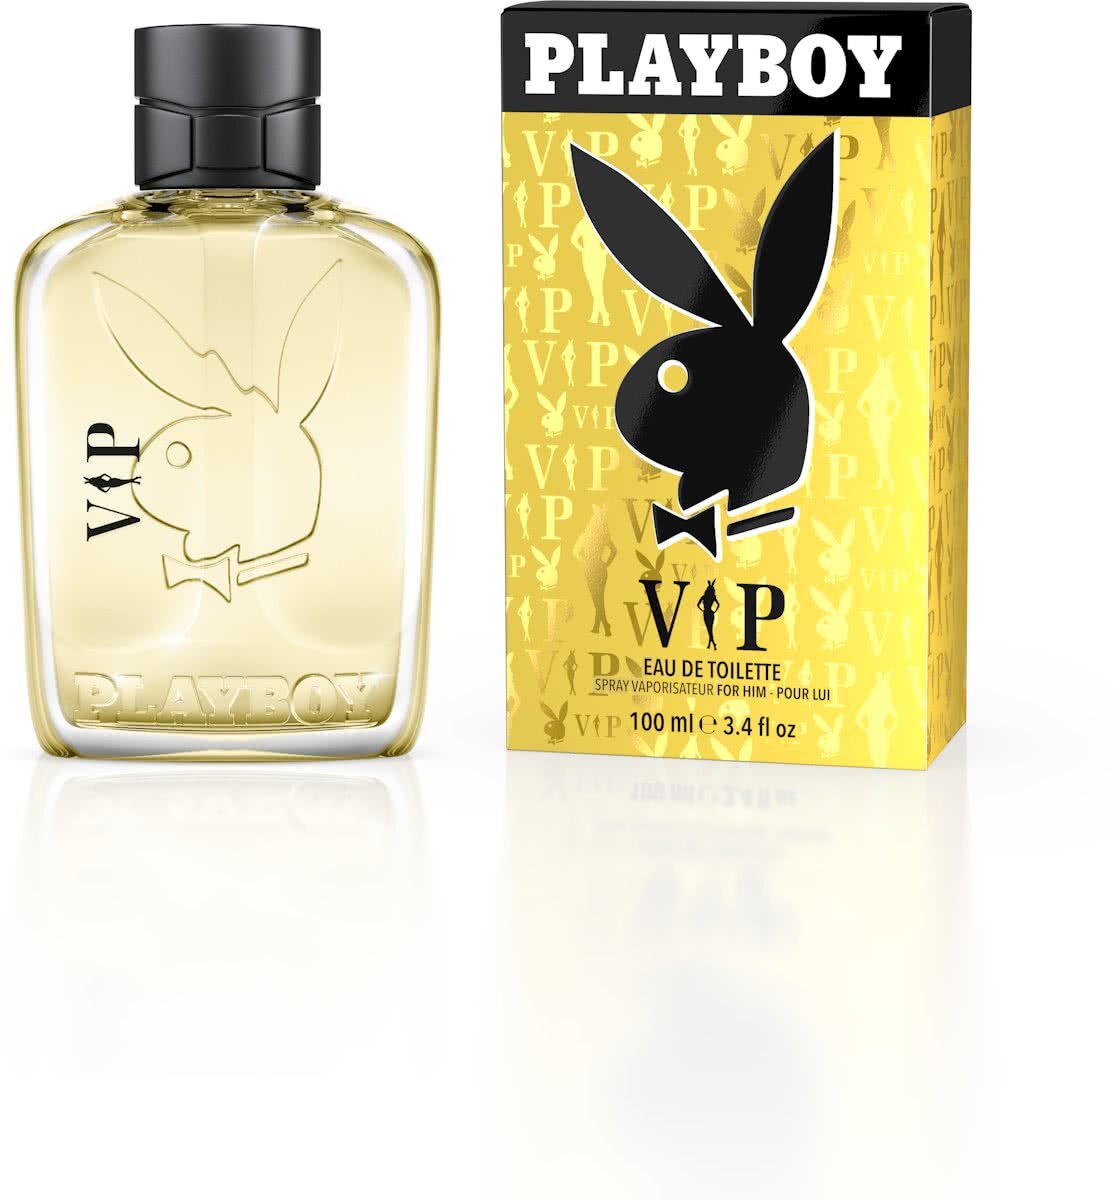 Playboy VIP Men Eau de Toilette 100 ml, per stuk verpakt (1 x 100 ml)